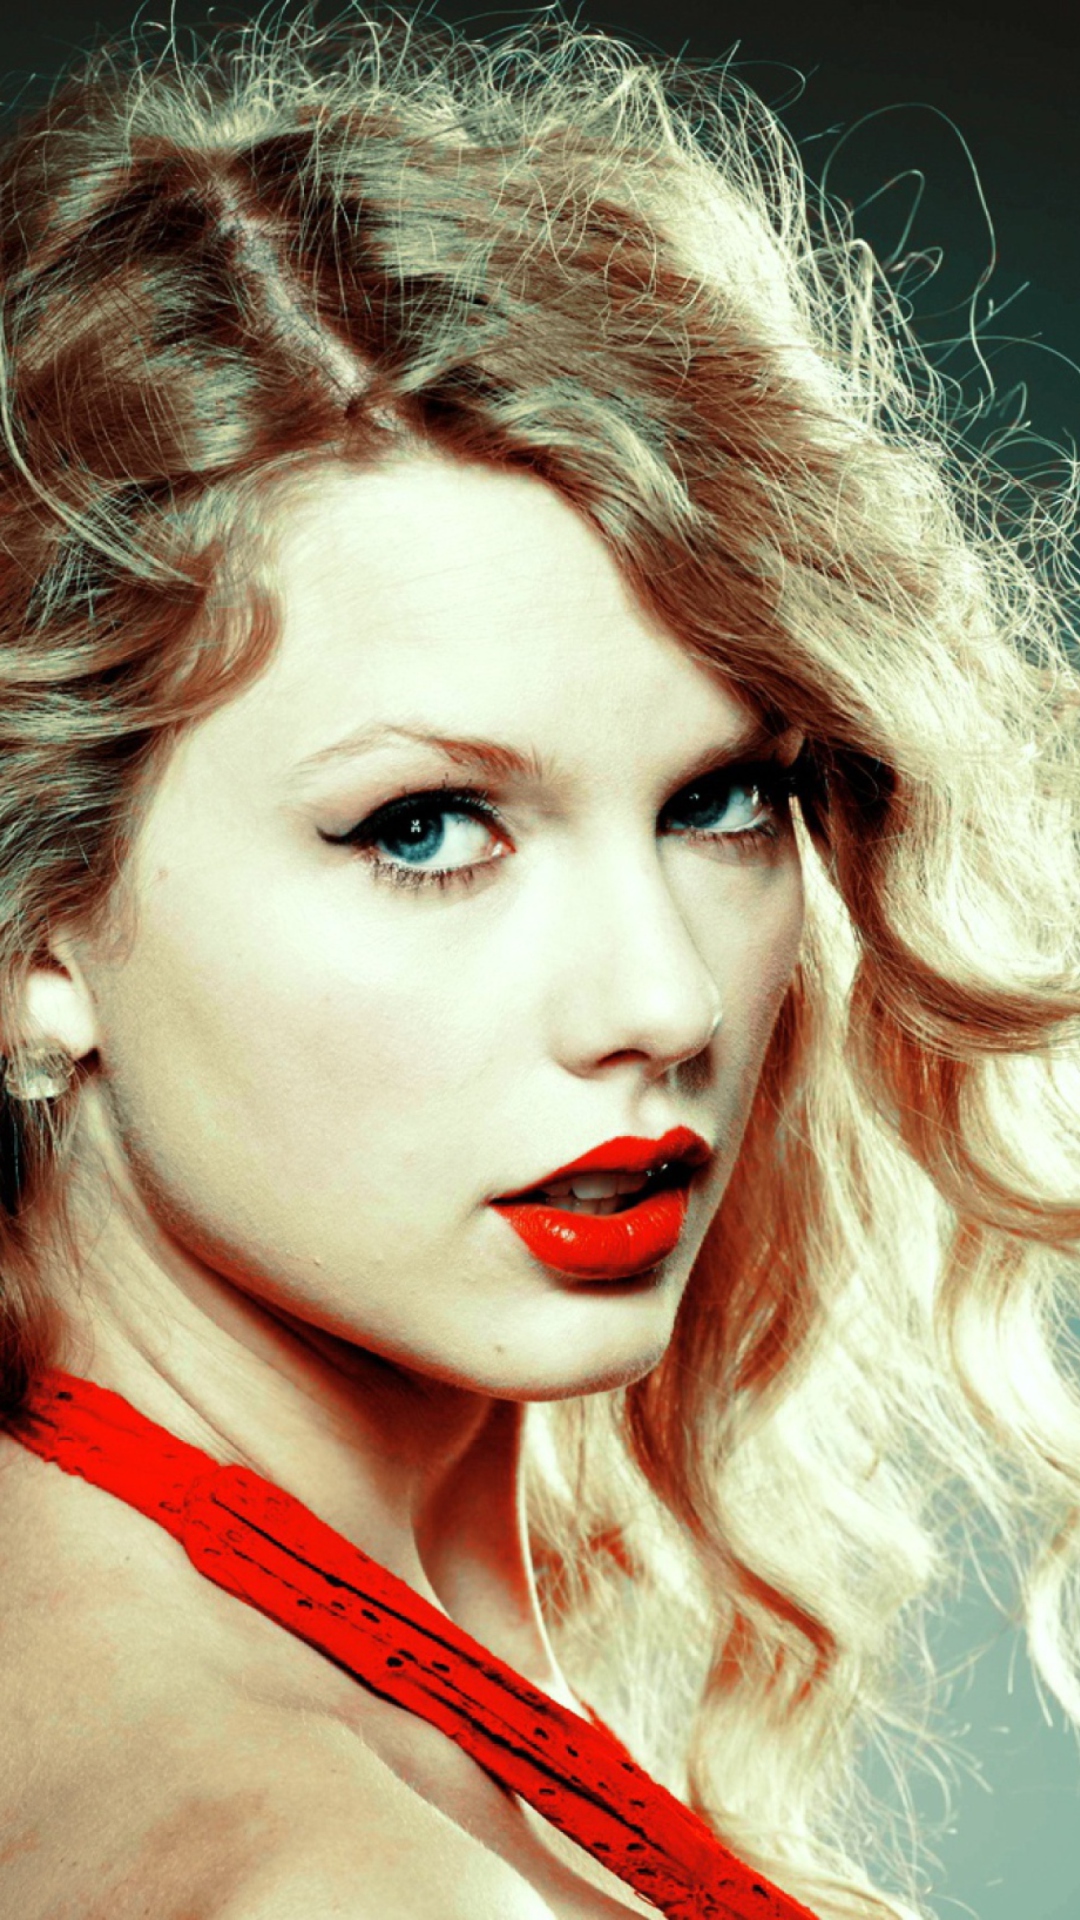 Taylor Swift In Red Dress wallpaper 1080x1920